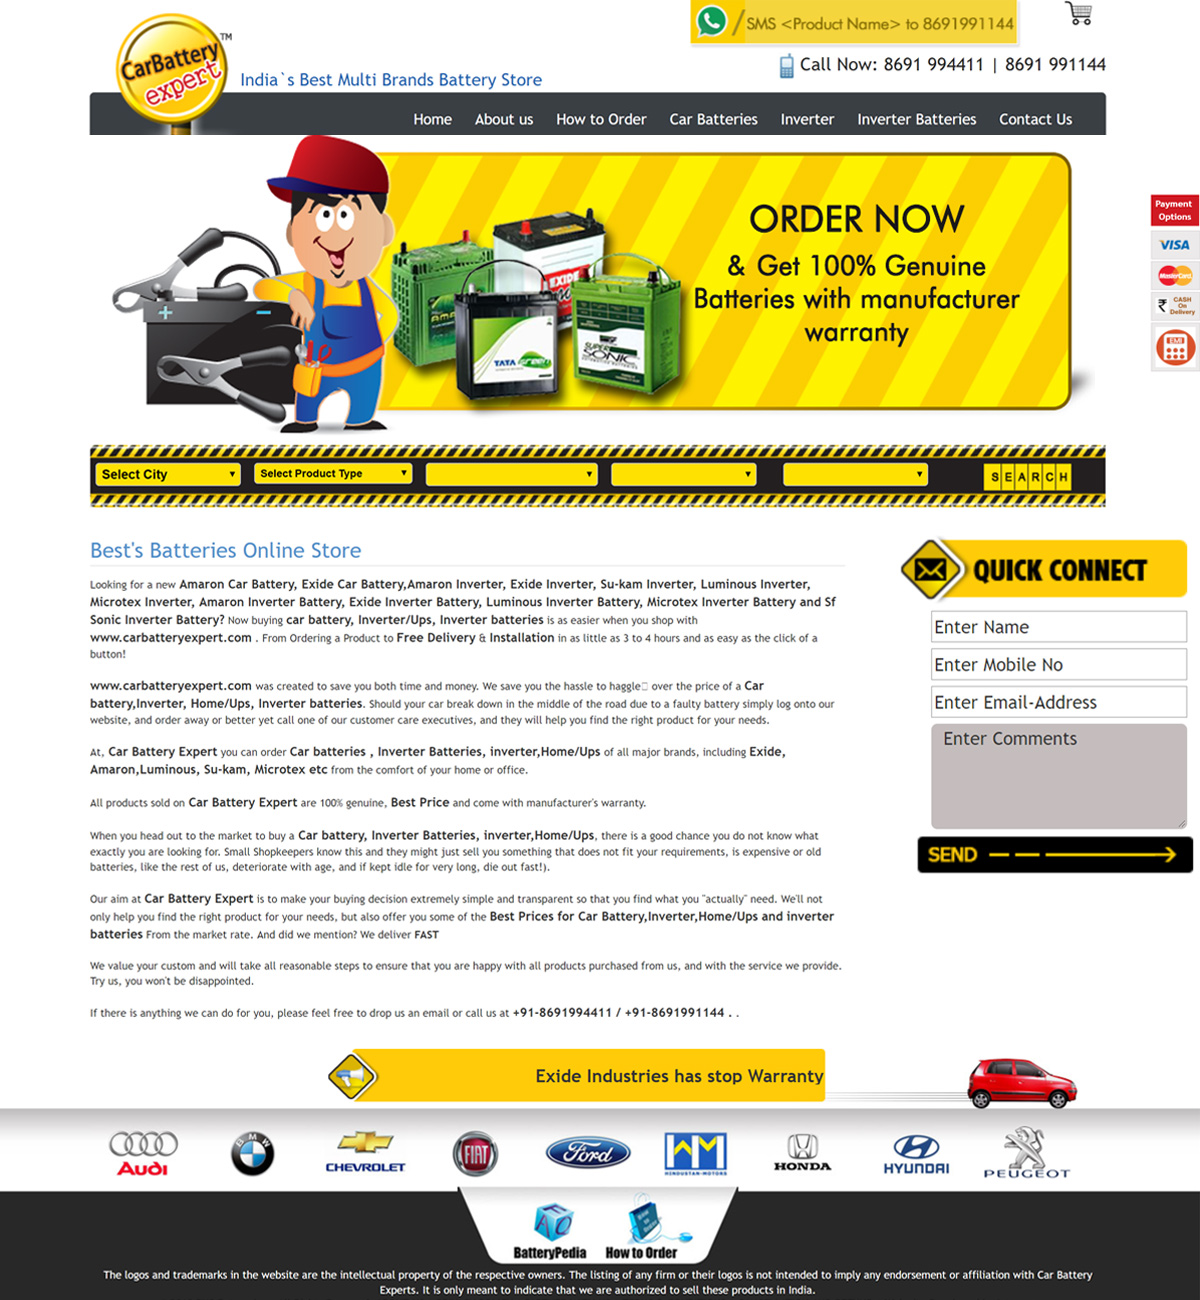 Website Design and Branding For Startup - Online Application For Selling Car Batteries